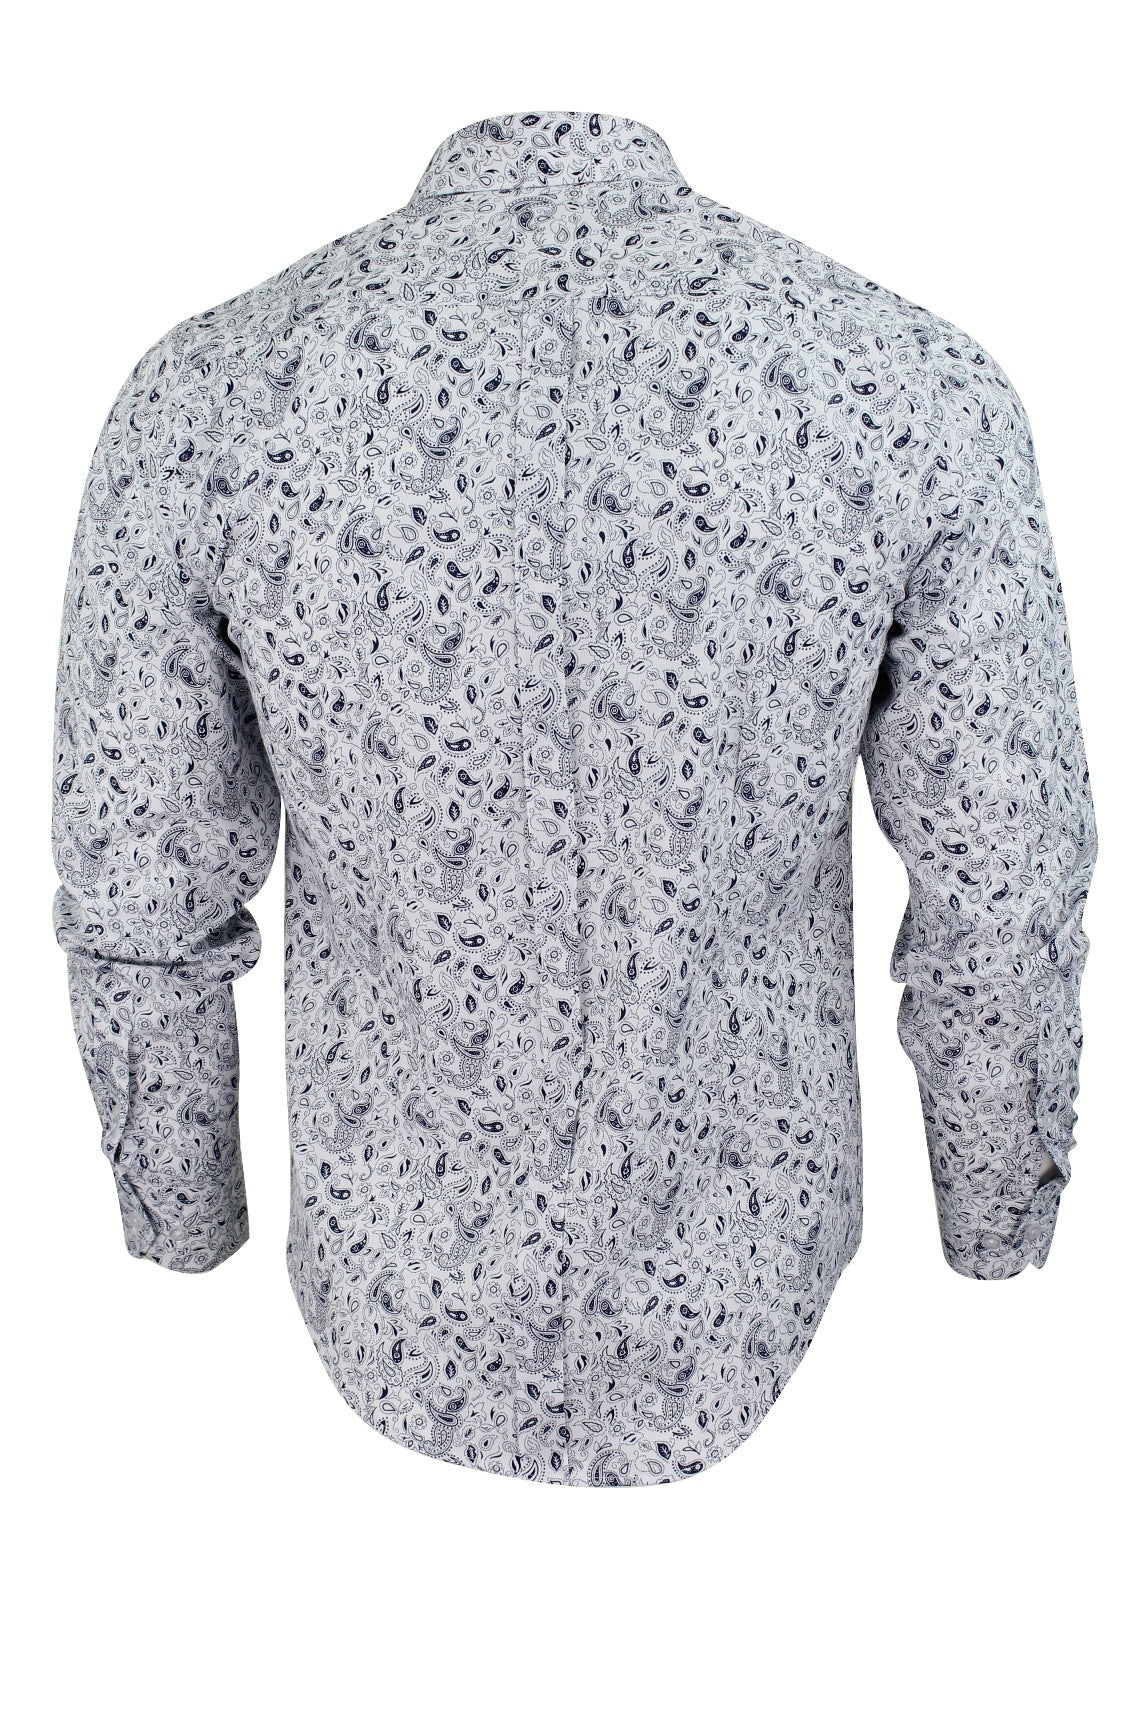 Mens Shirt Paisley by Xact - Fashion Long Sleeve Button Down, 03, Mshx104, Navy/ White